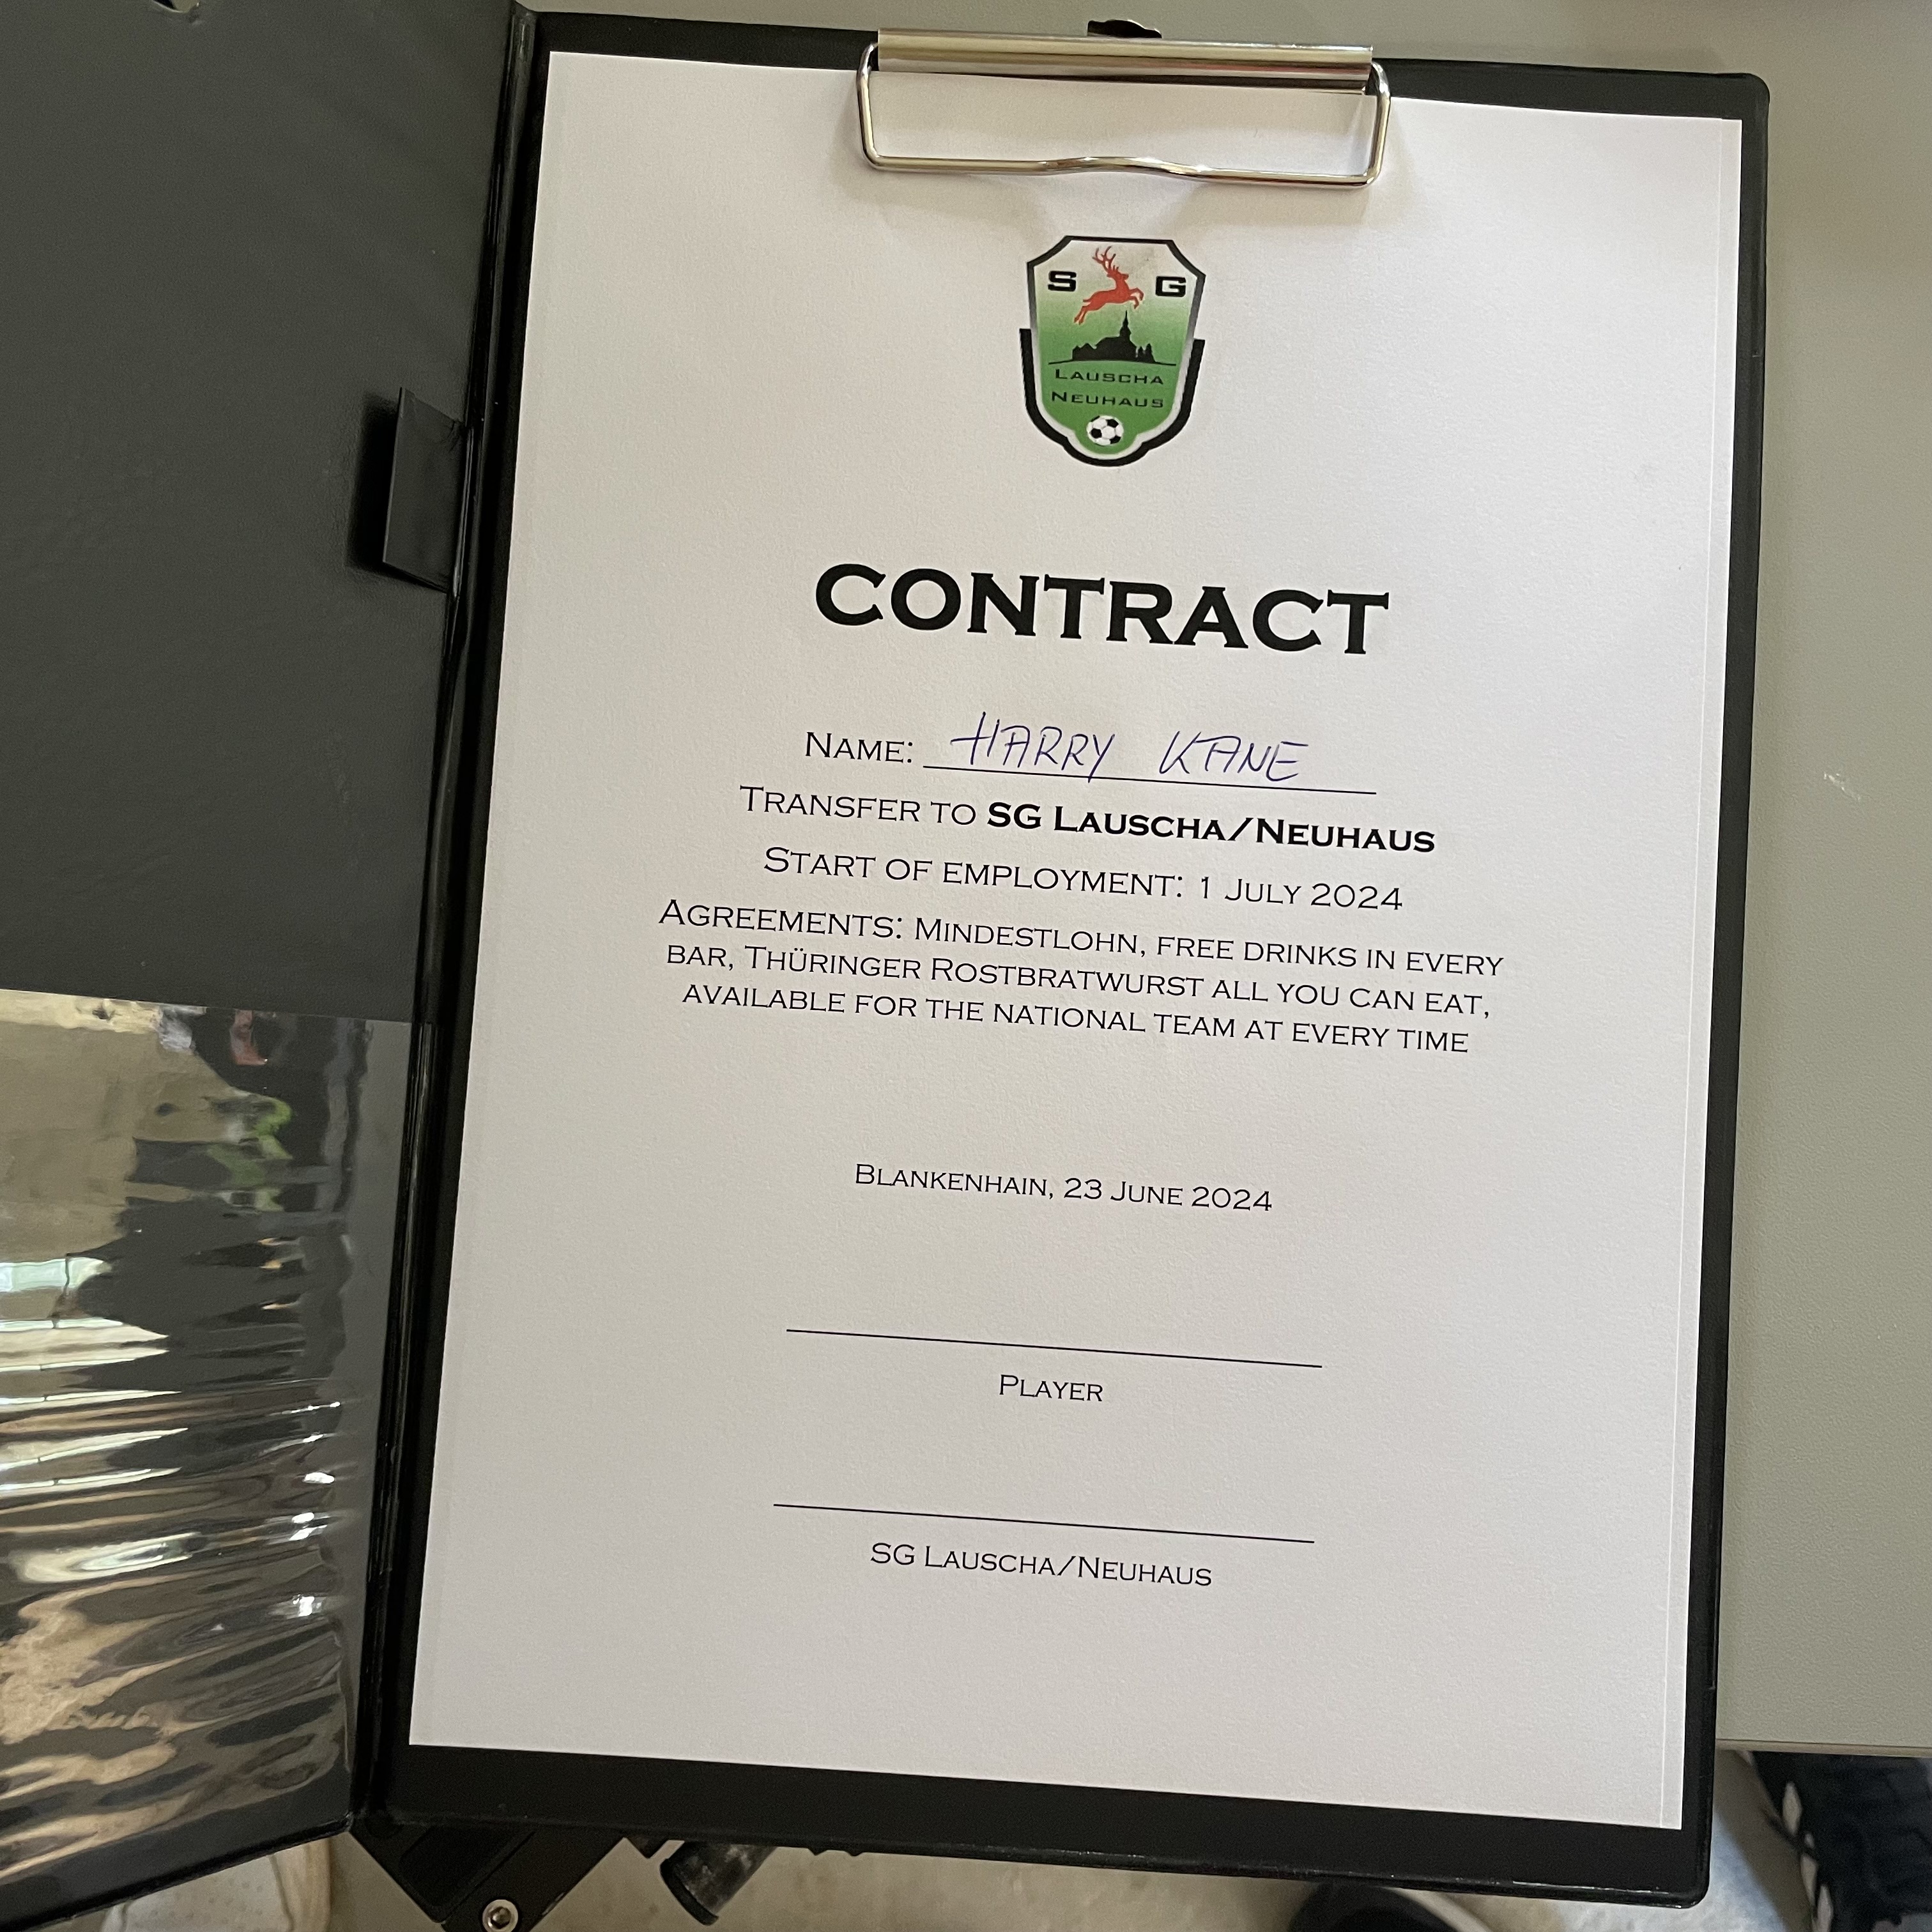 Harry Kane's contract offer from SG Lauscha/Neuhaus